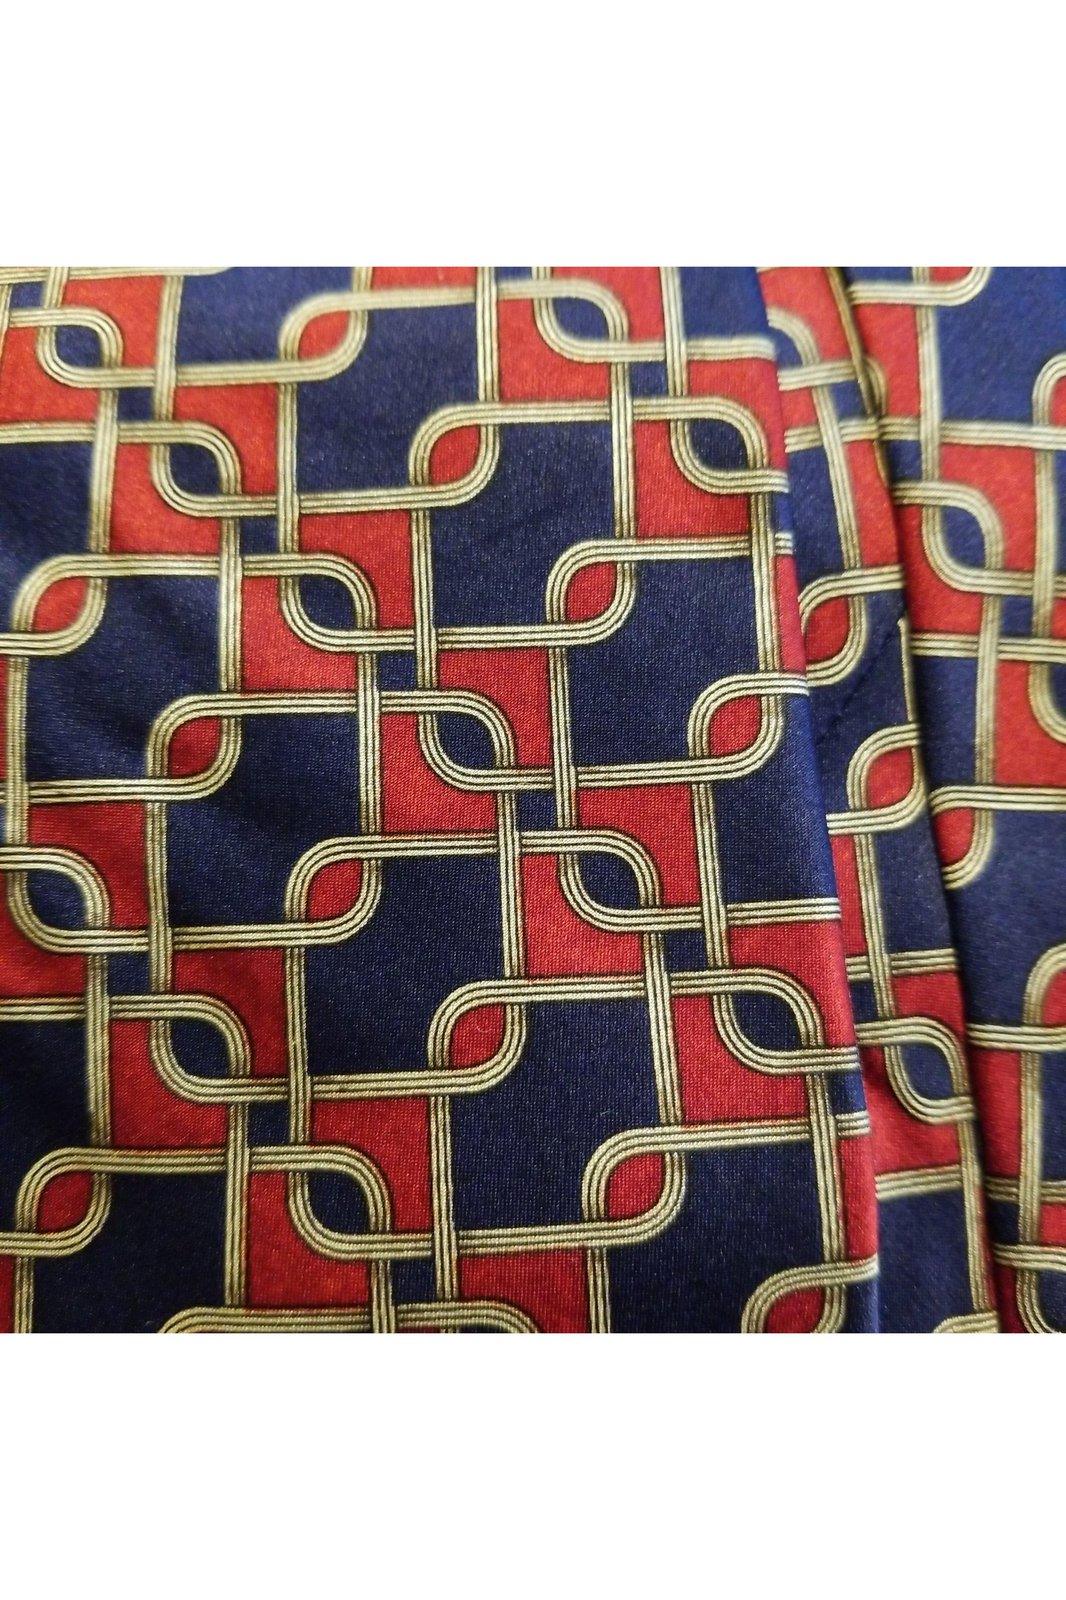 The Custom Shop Shirtmakers men's blue and red necktie 